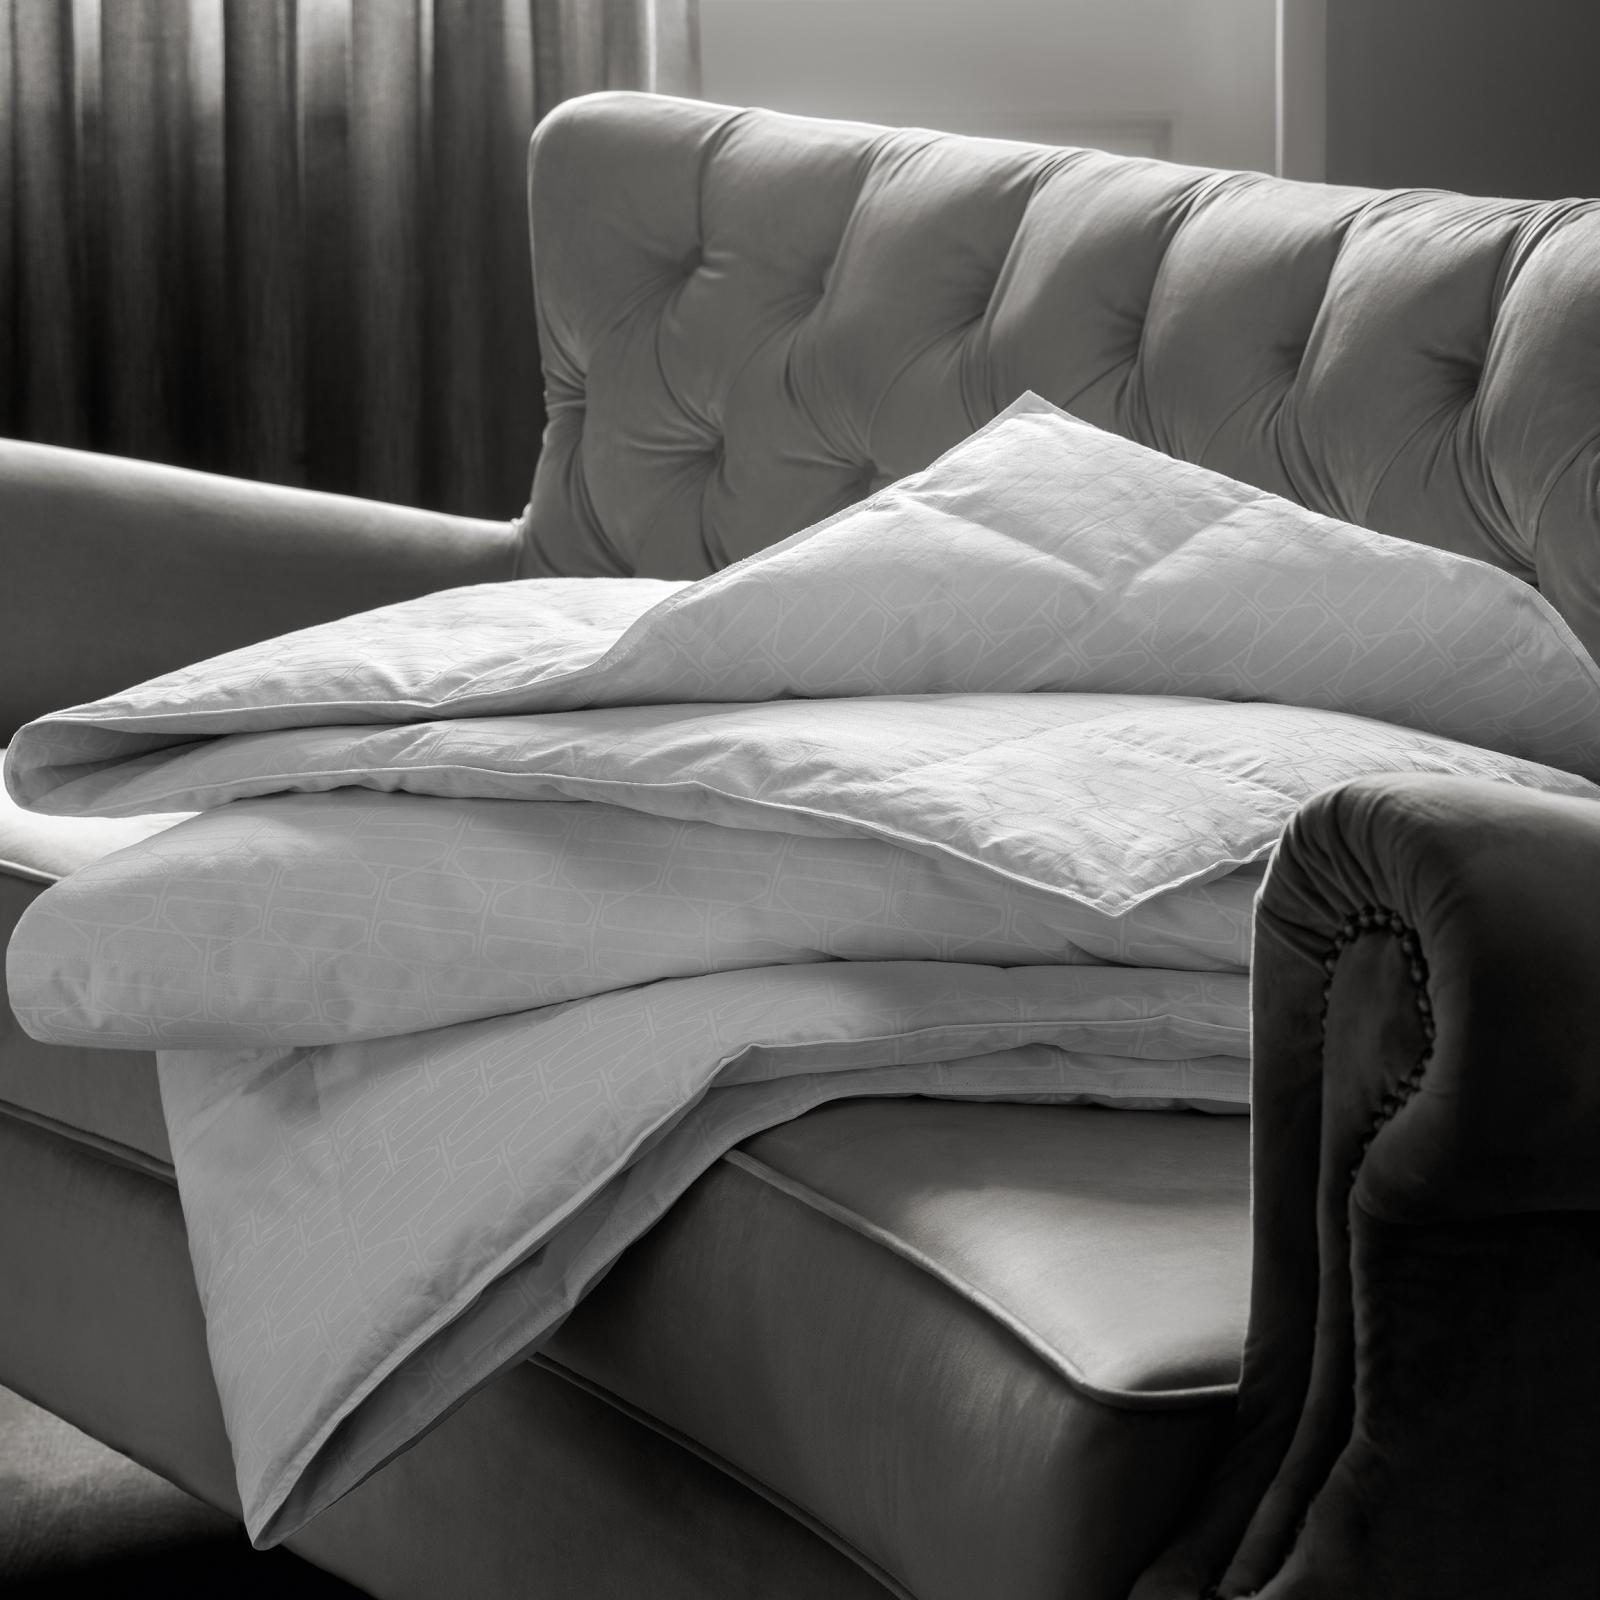 Одеяло Орион Togas 140х200, размер 140х200 см - фото 7